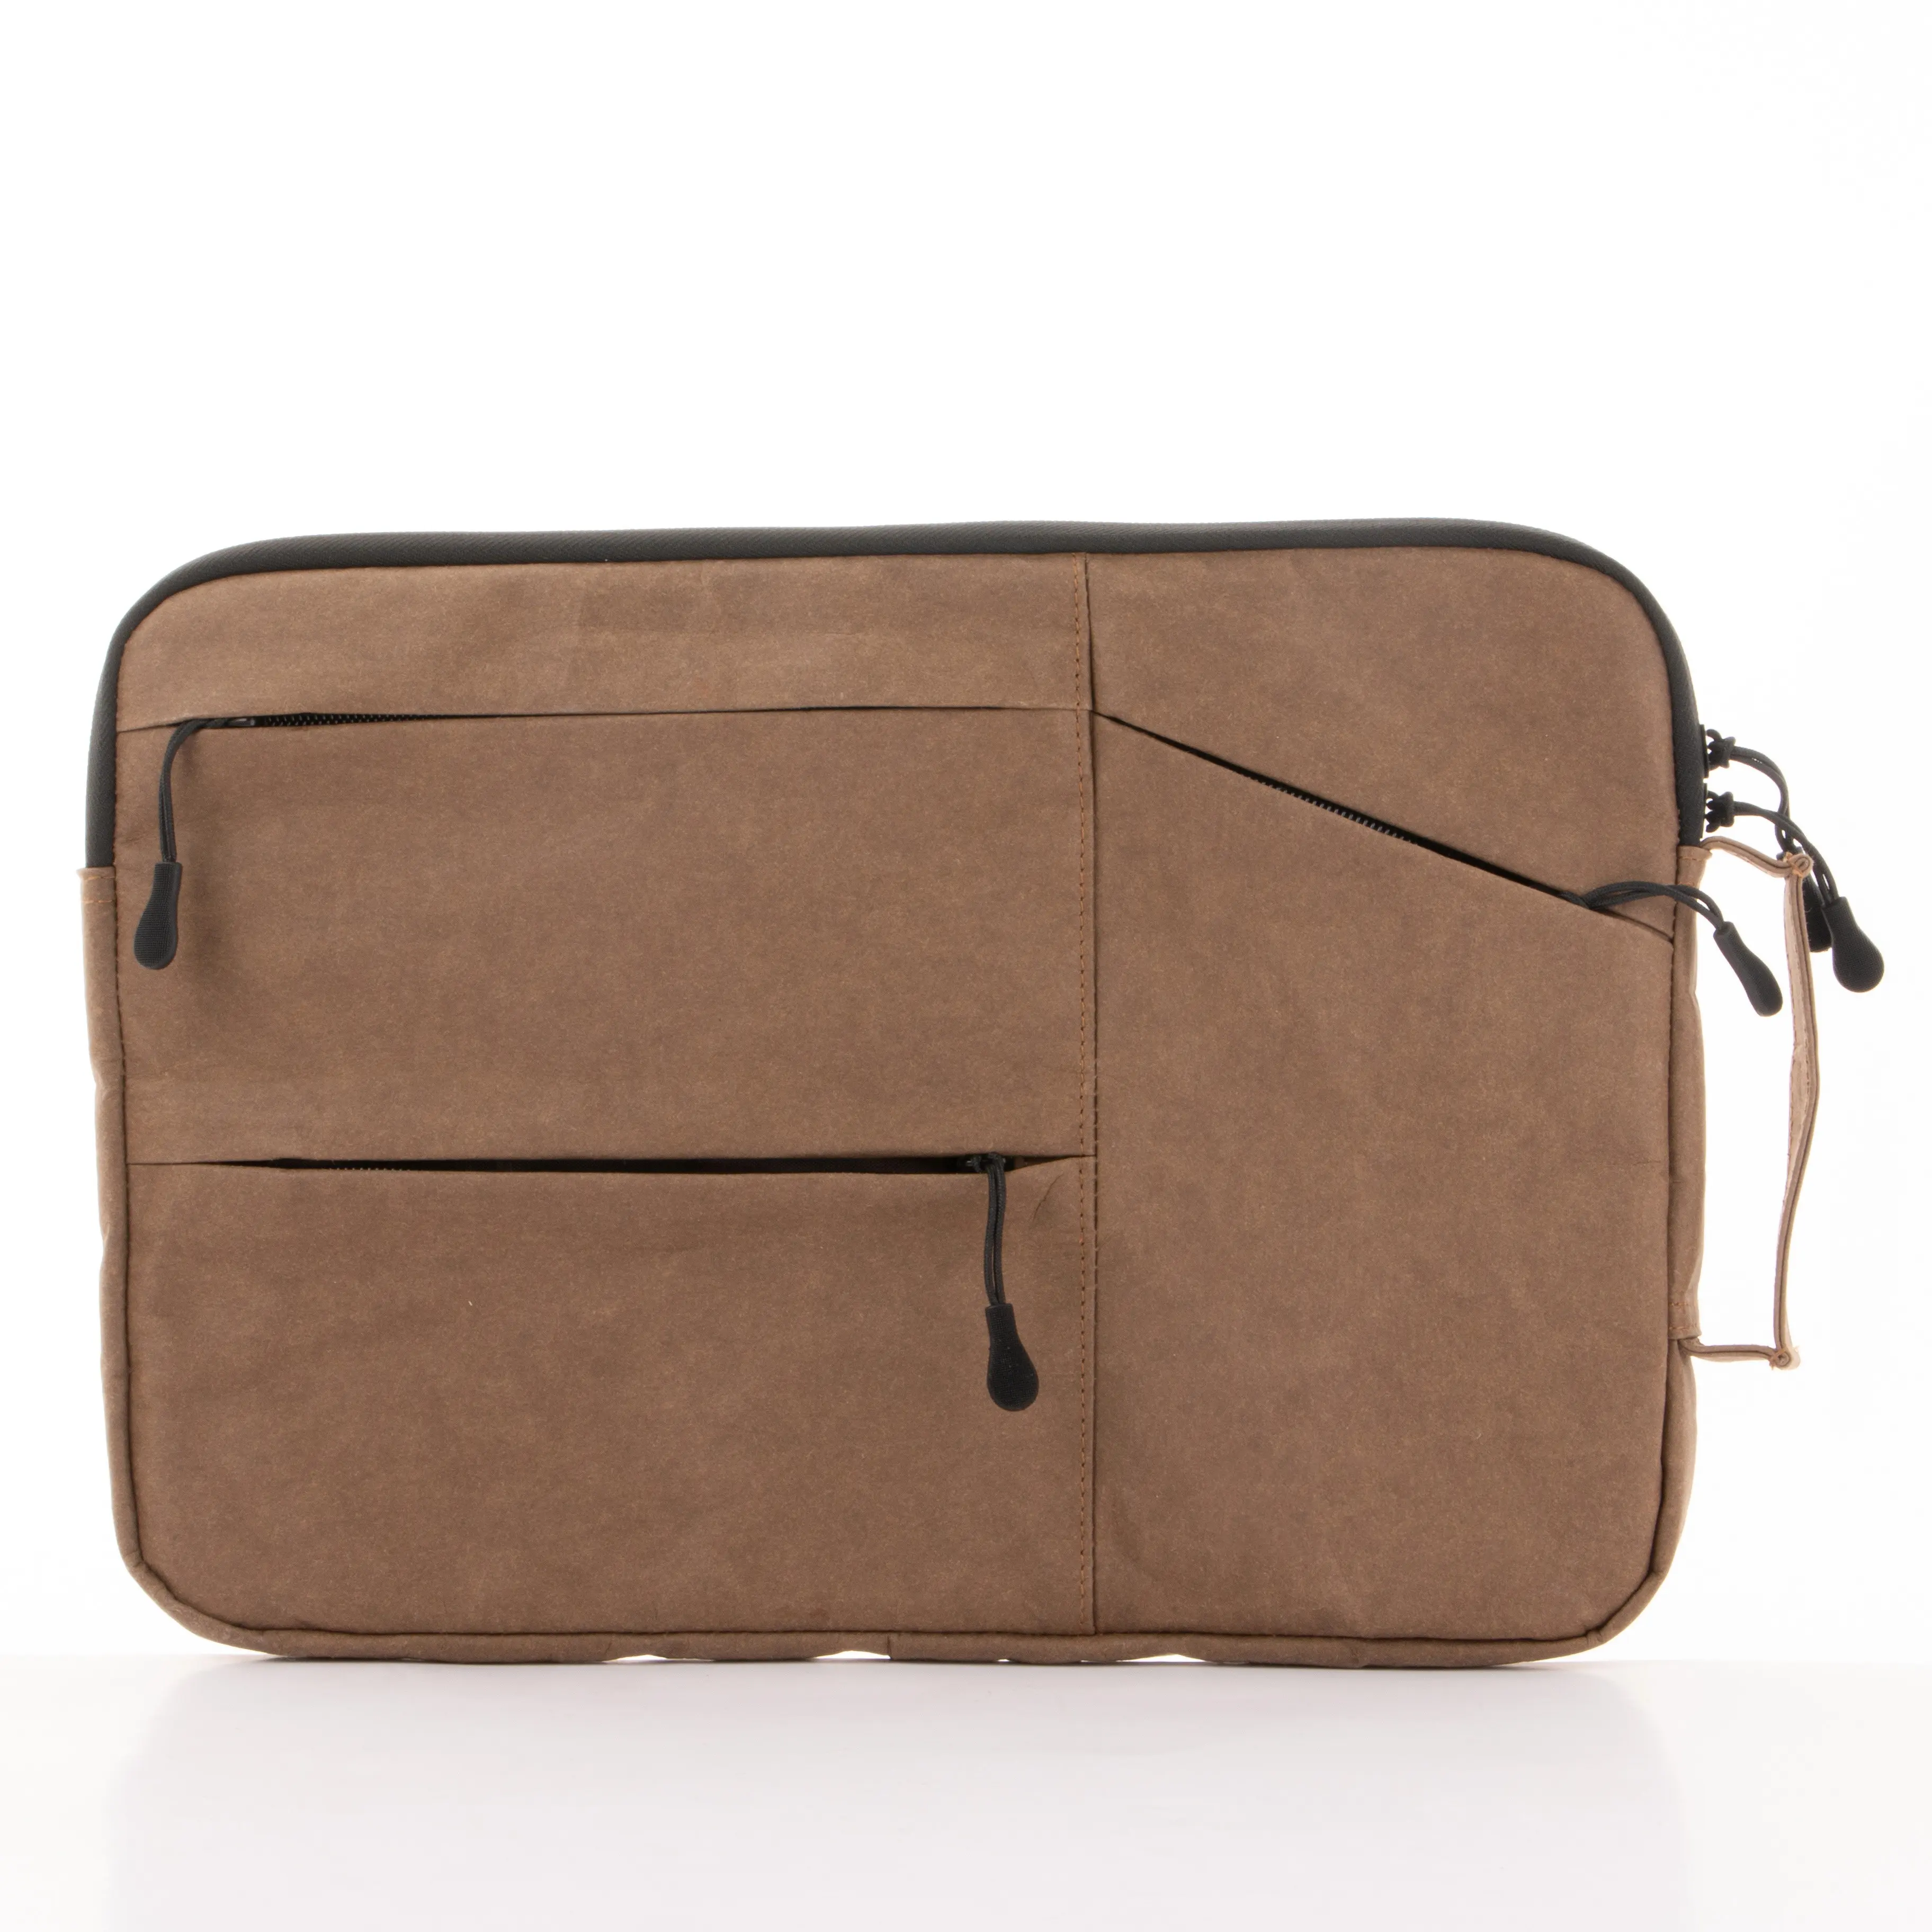 Top grade customize size various color plush lining 11 12 13 14 15 15.6 inch kraft paper laptop sleeve case bag